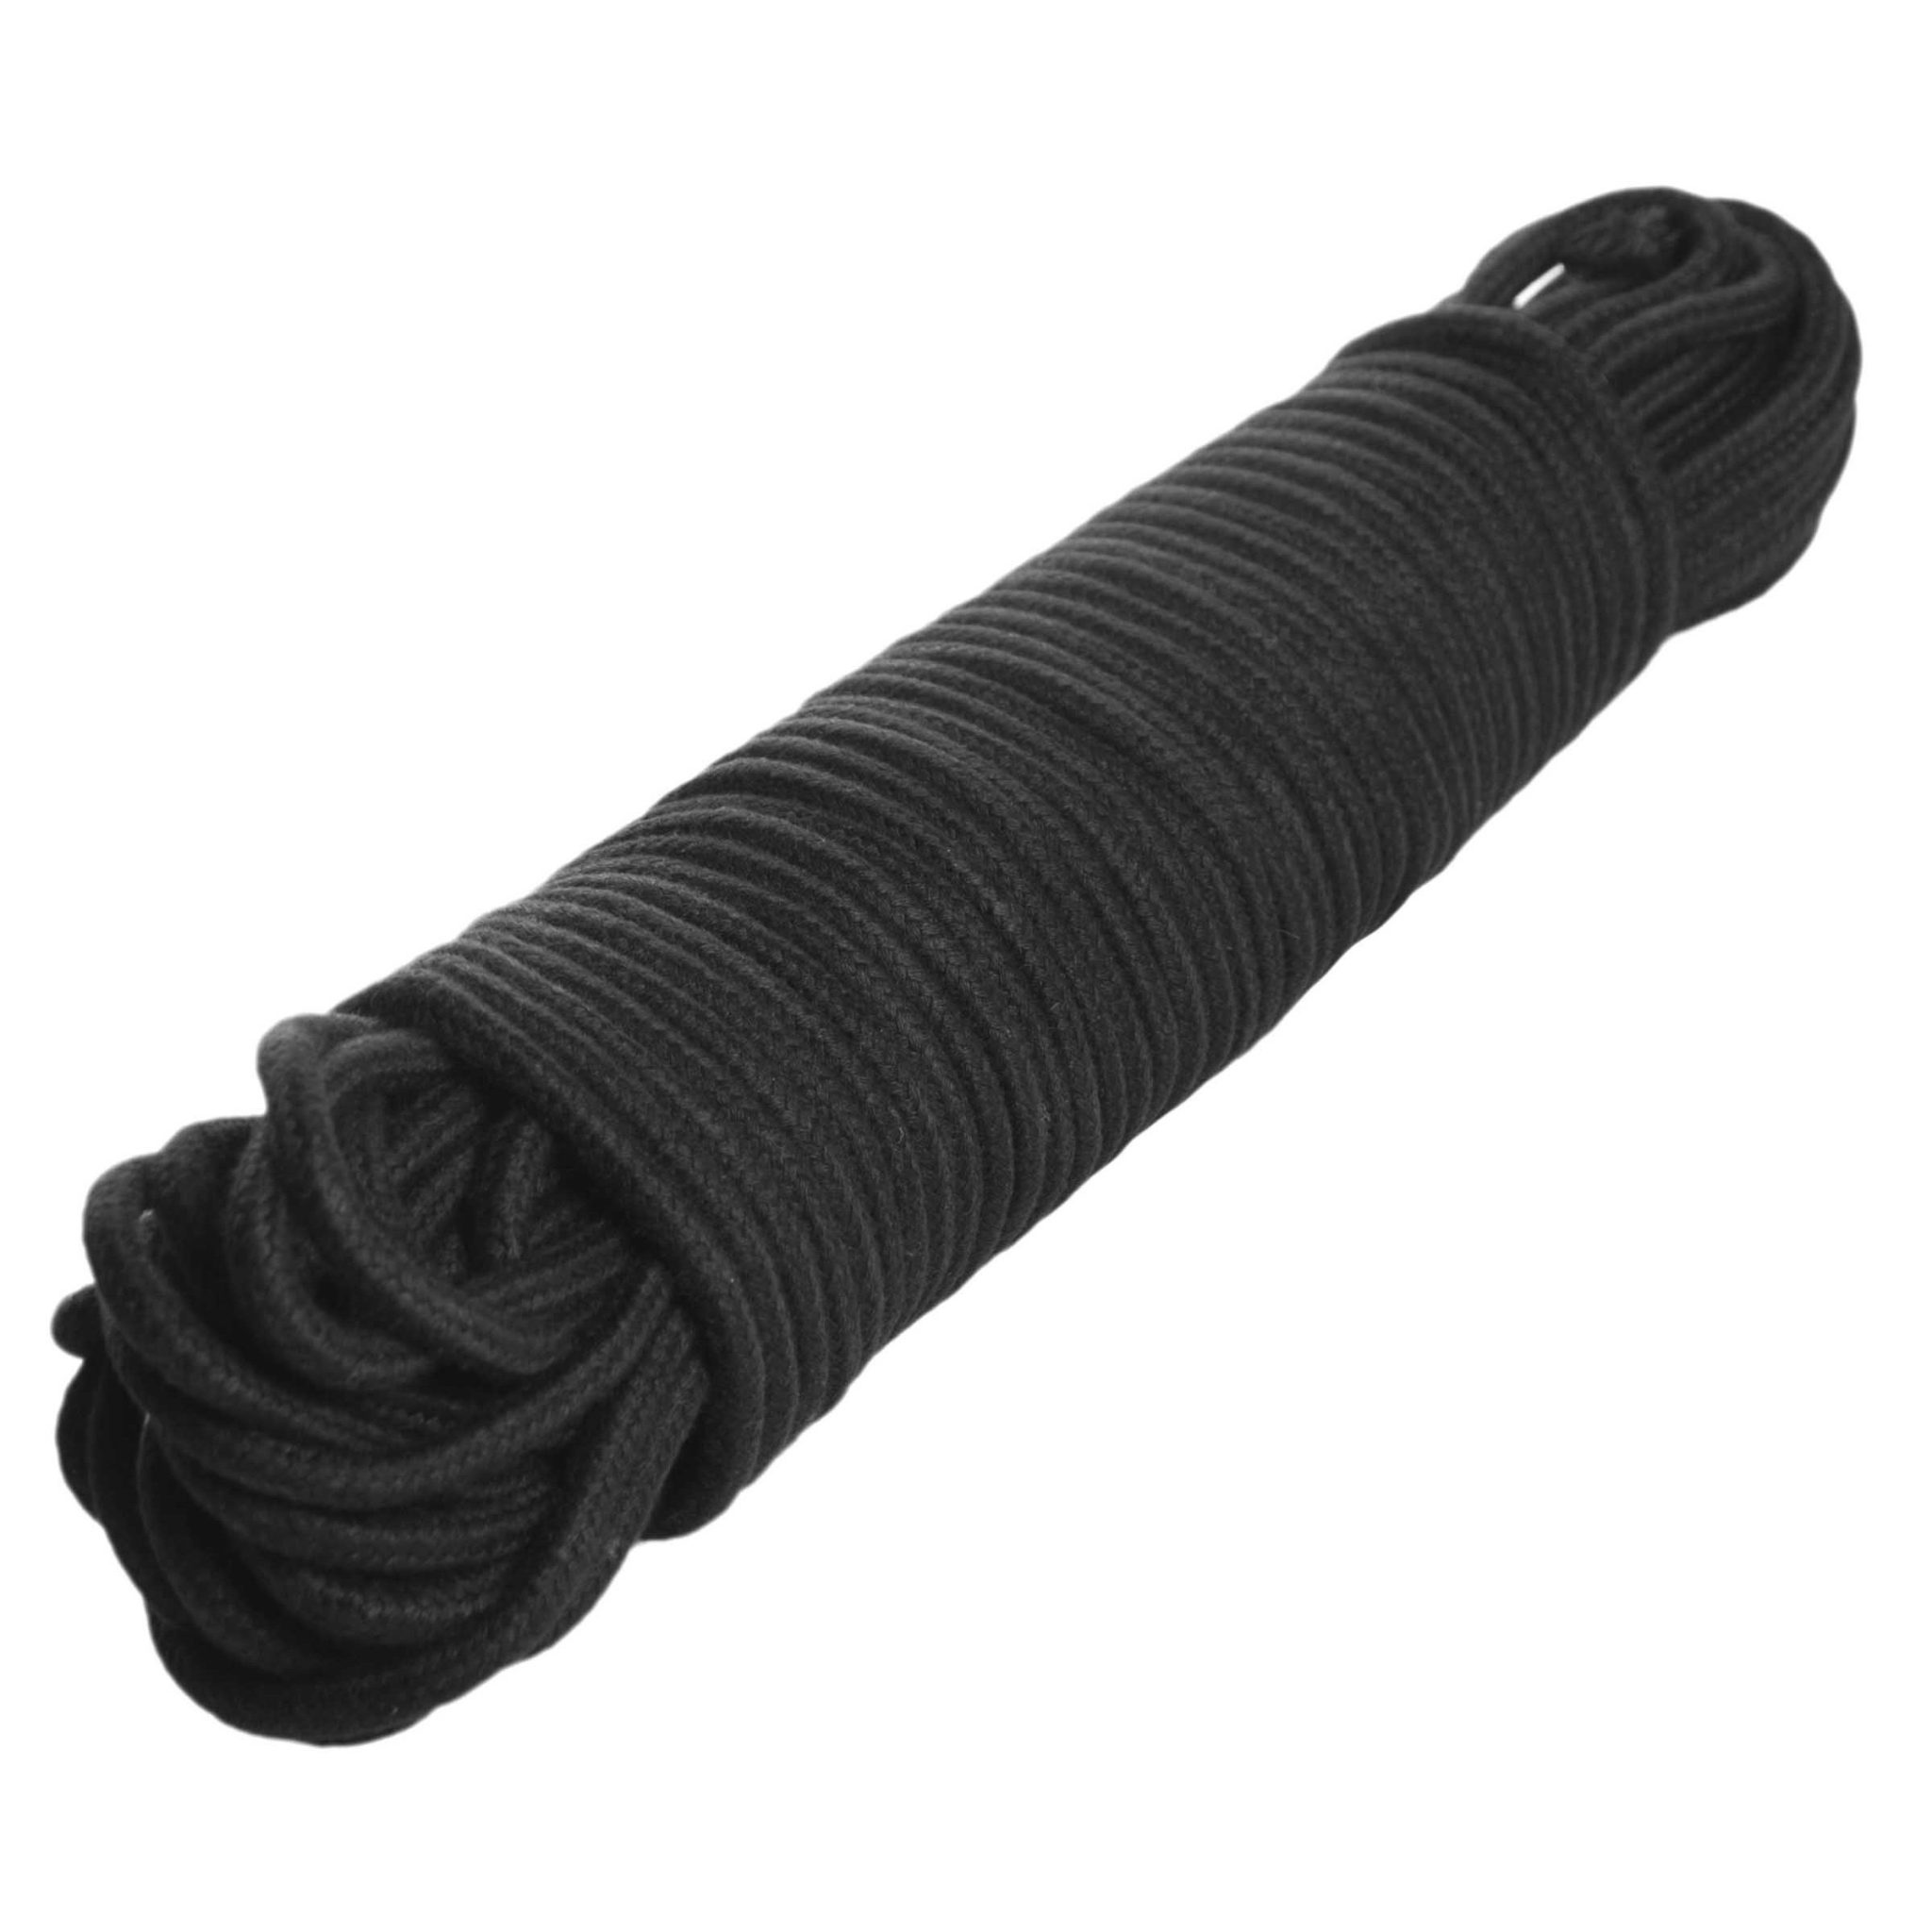 96 Foot Cotton Bondage Rope – Black